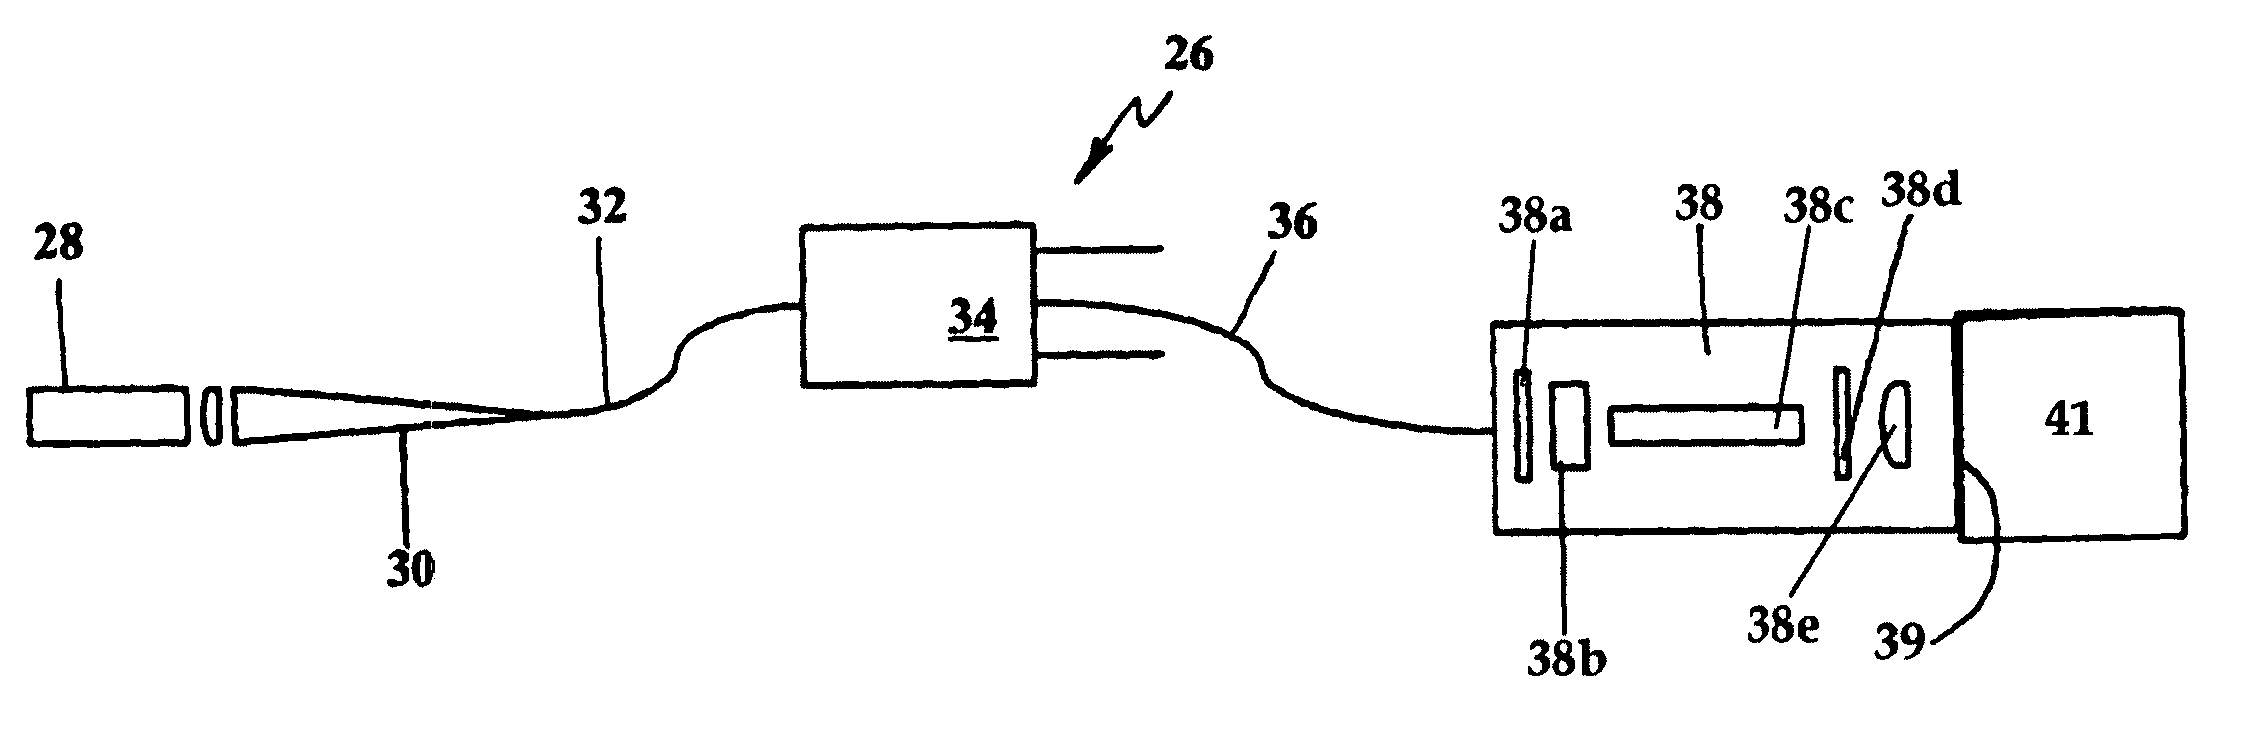 Laser spark distribution and ignition system